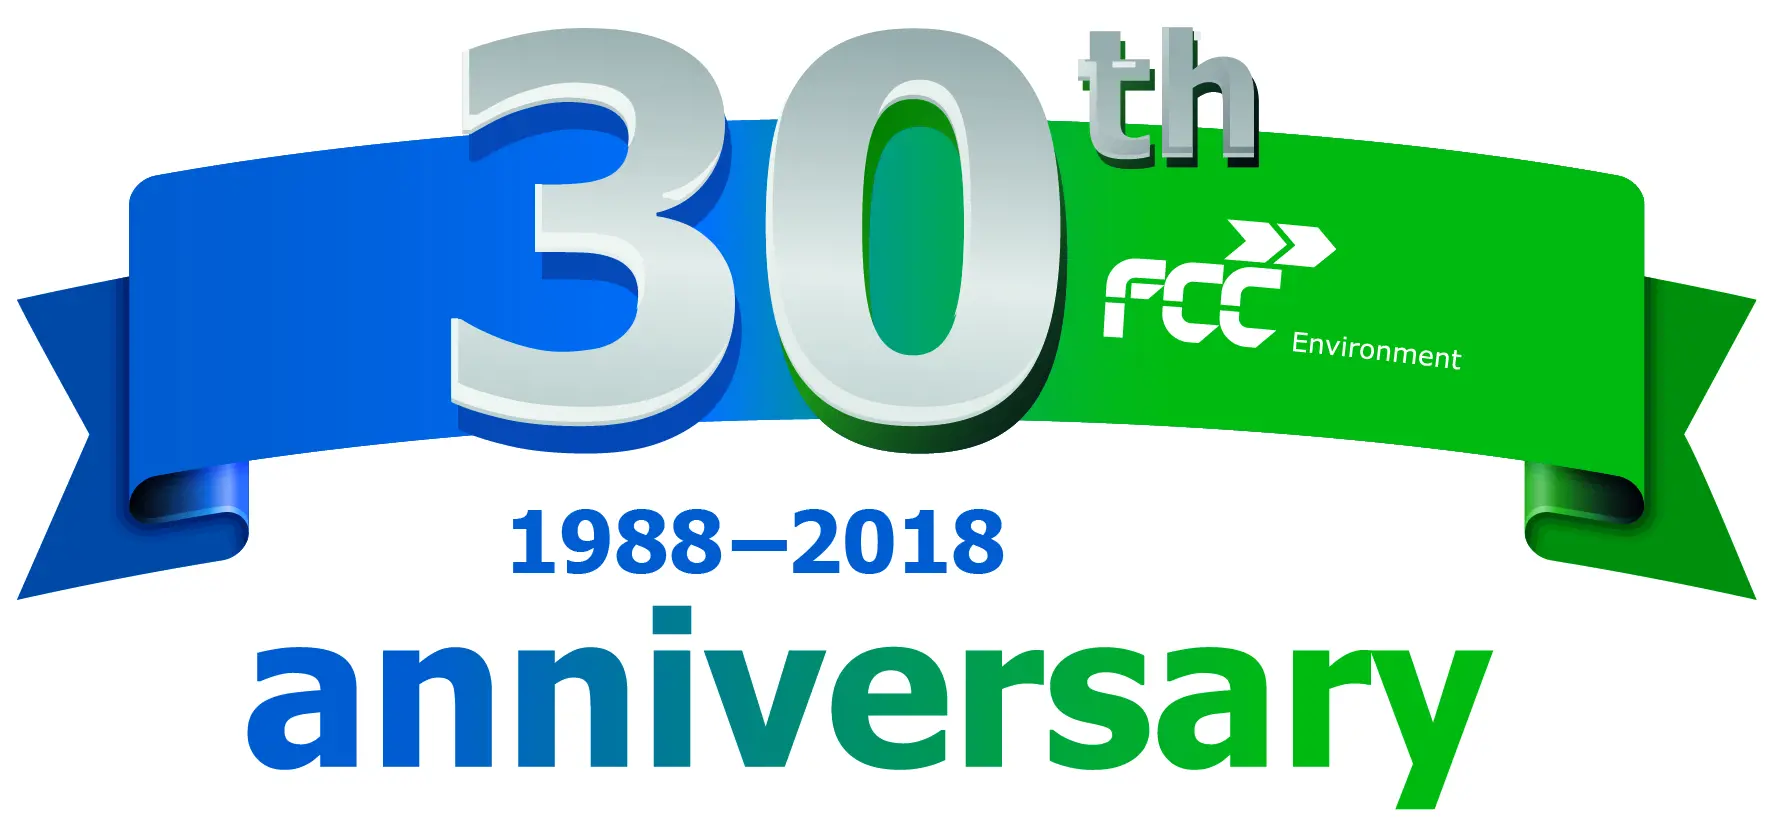 FCC Environment CEE Group celebrates 30th anniversary